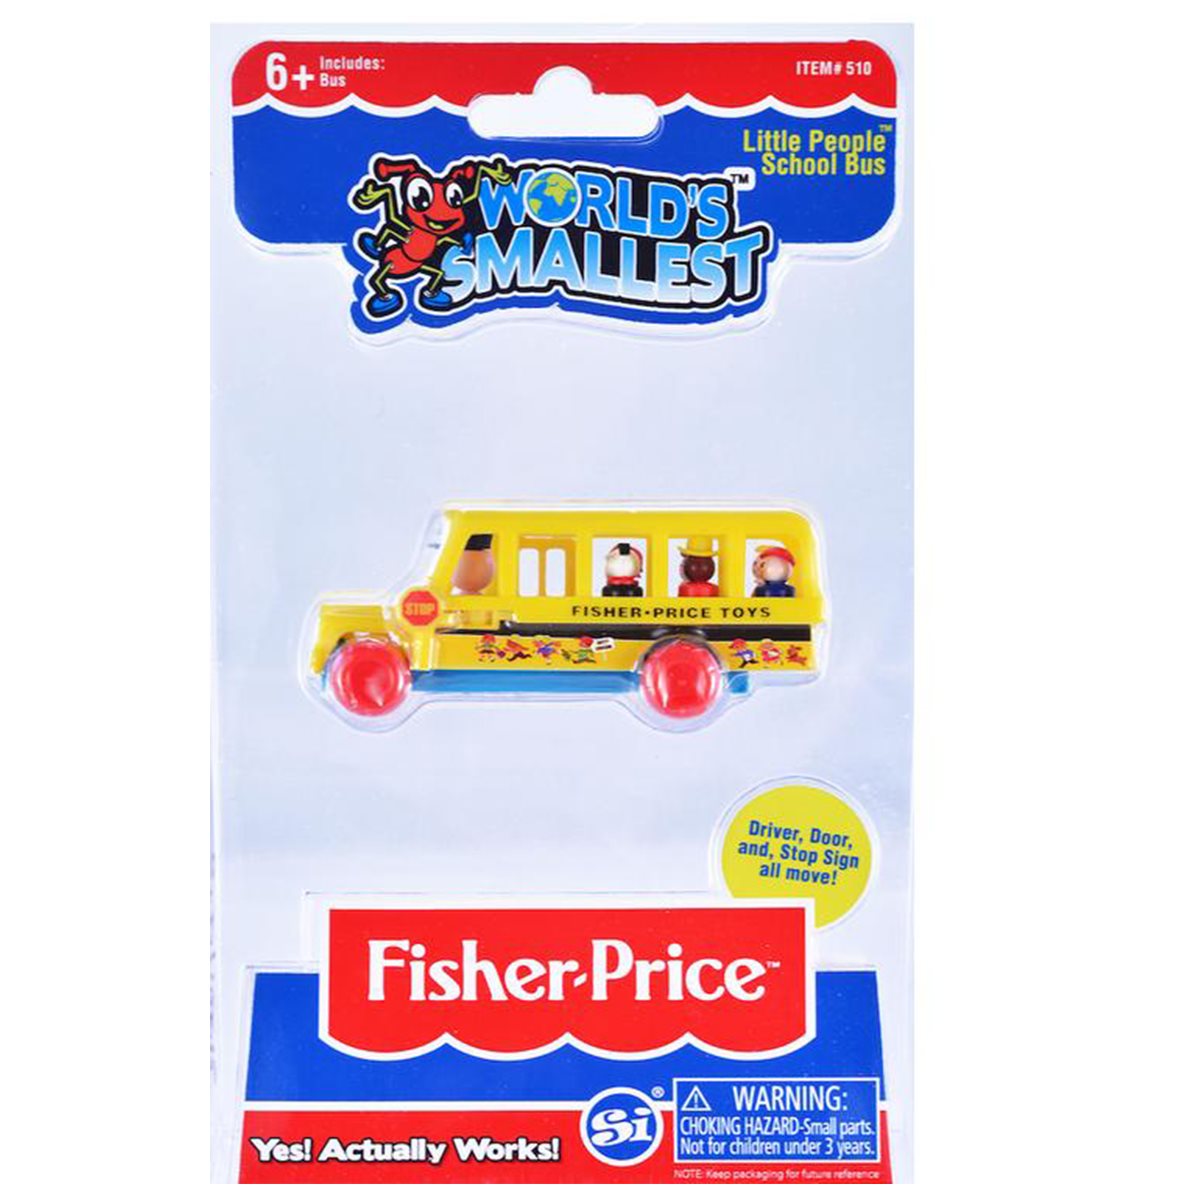 New Toy Choking Hazard World's Smallest Fisher Price Bus Toy 